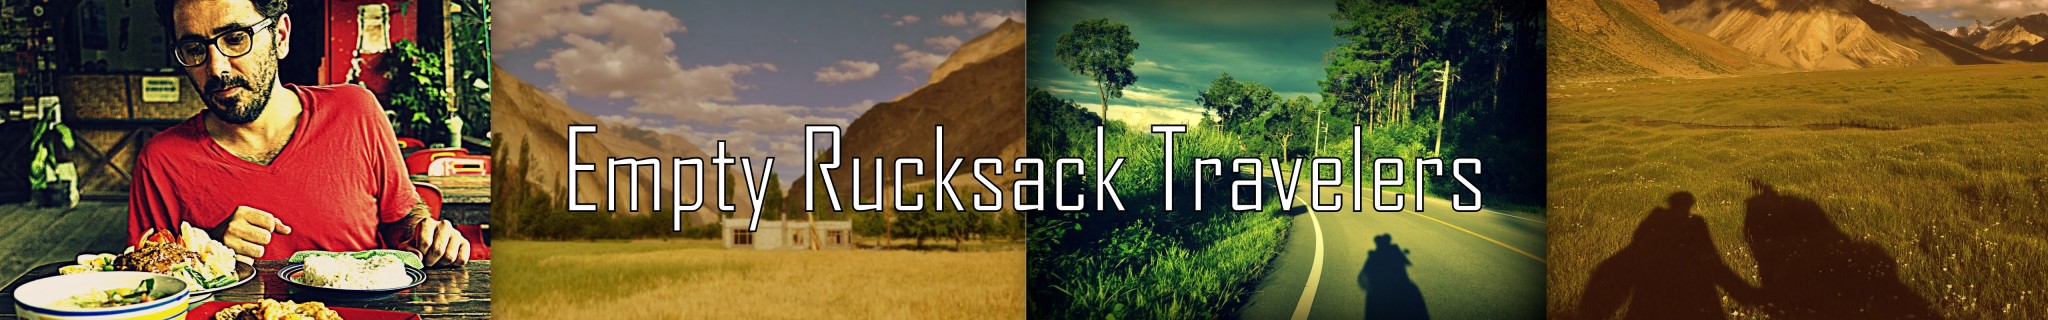 Empty Rucksack Travelers Club